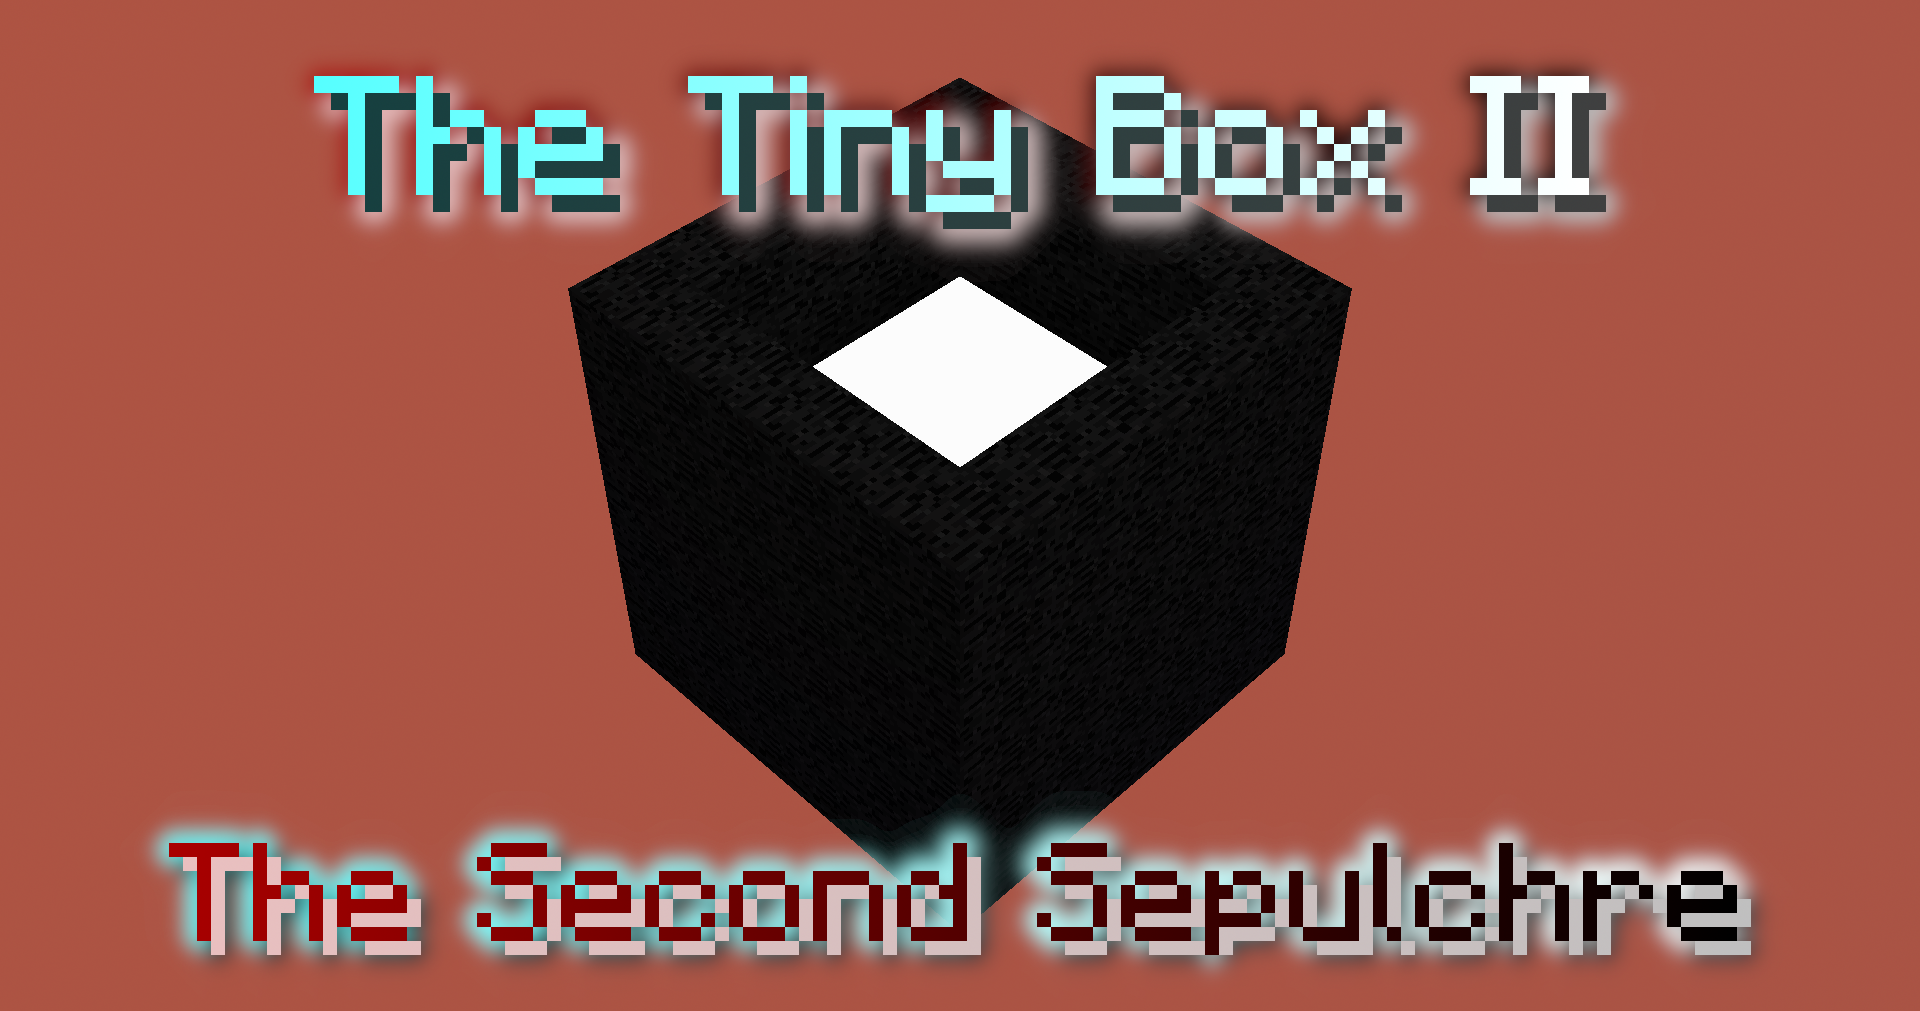 Baixar The Tiny Box II - The Second Sepulchre para Minecraft 1.15.2